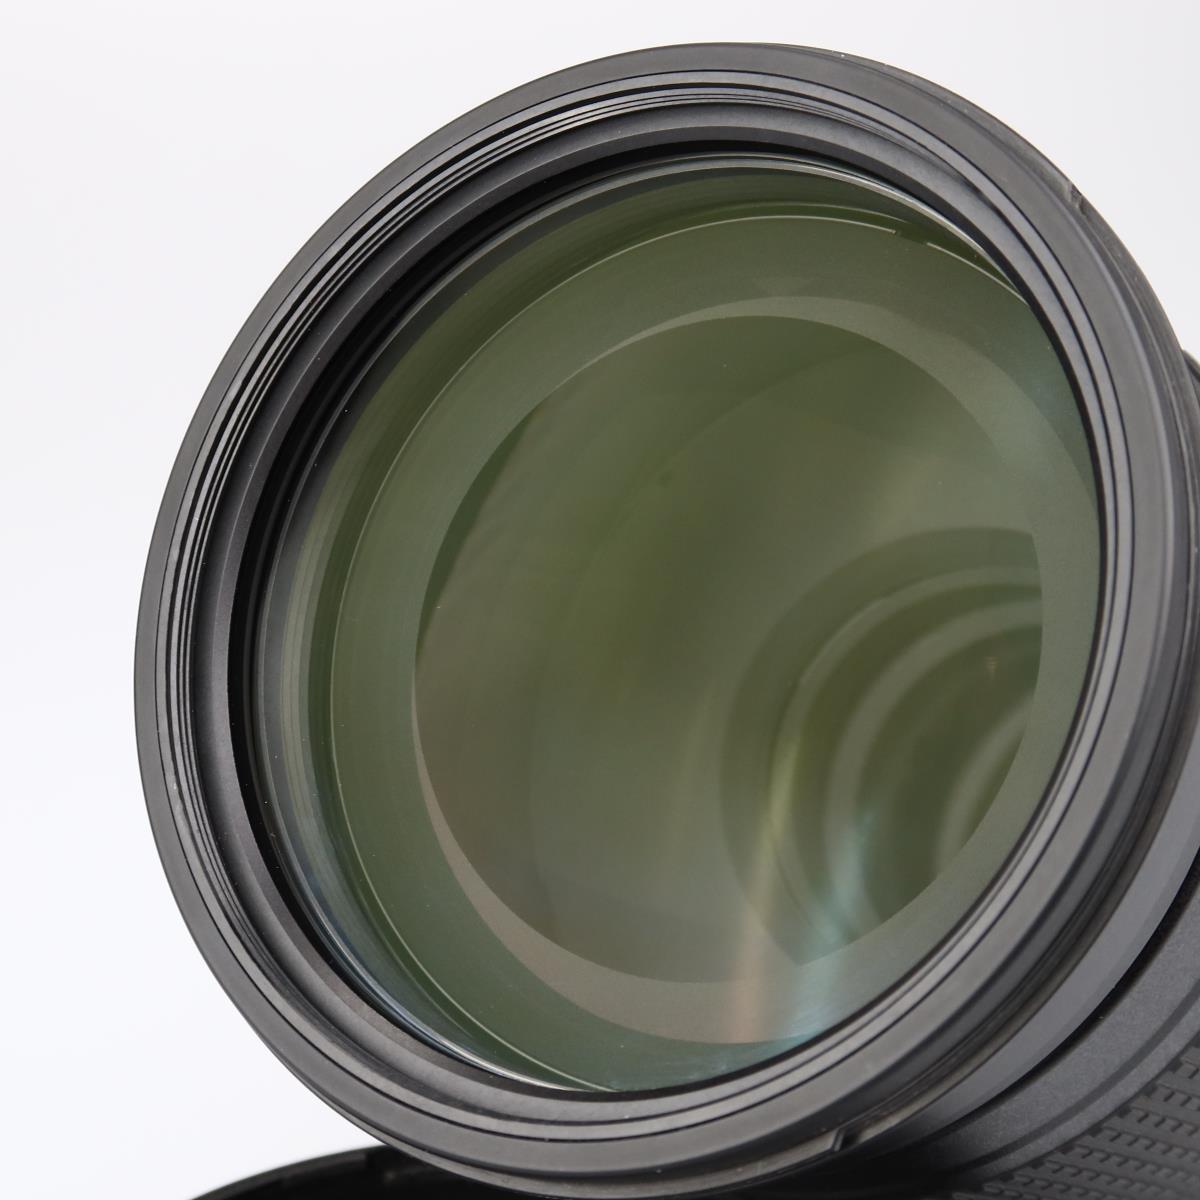 (Myyty) Nikon AF-S Nikkor 200-500mm f/5.6E ED VR (käytetty)